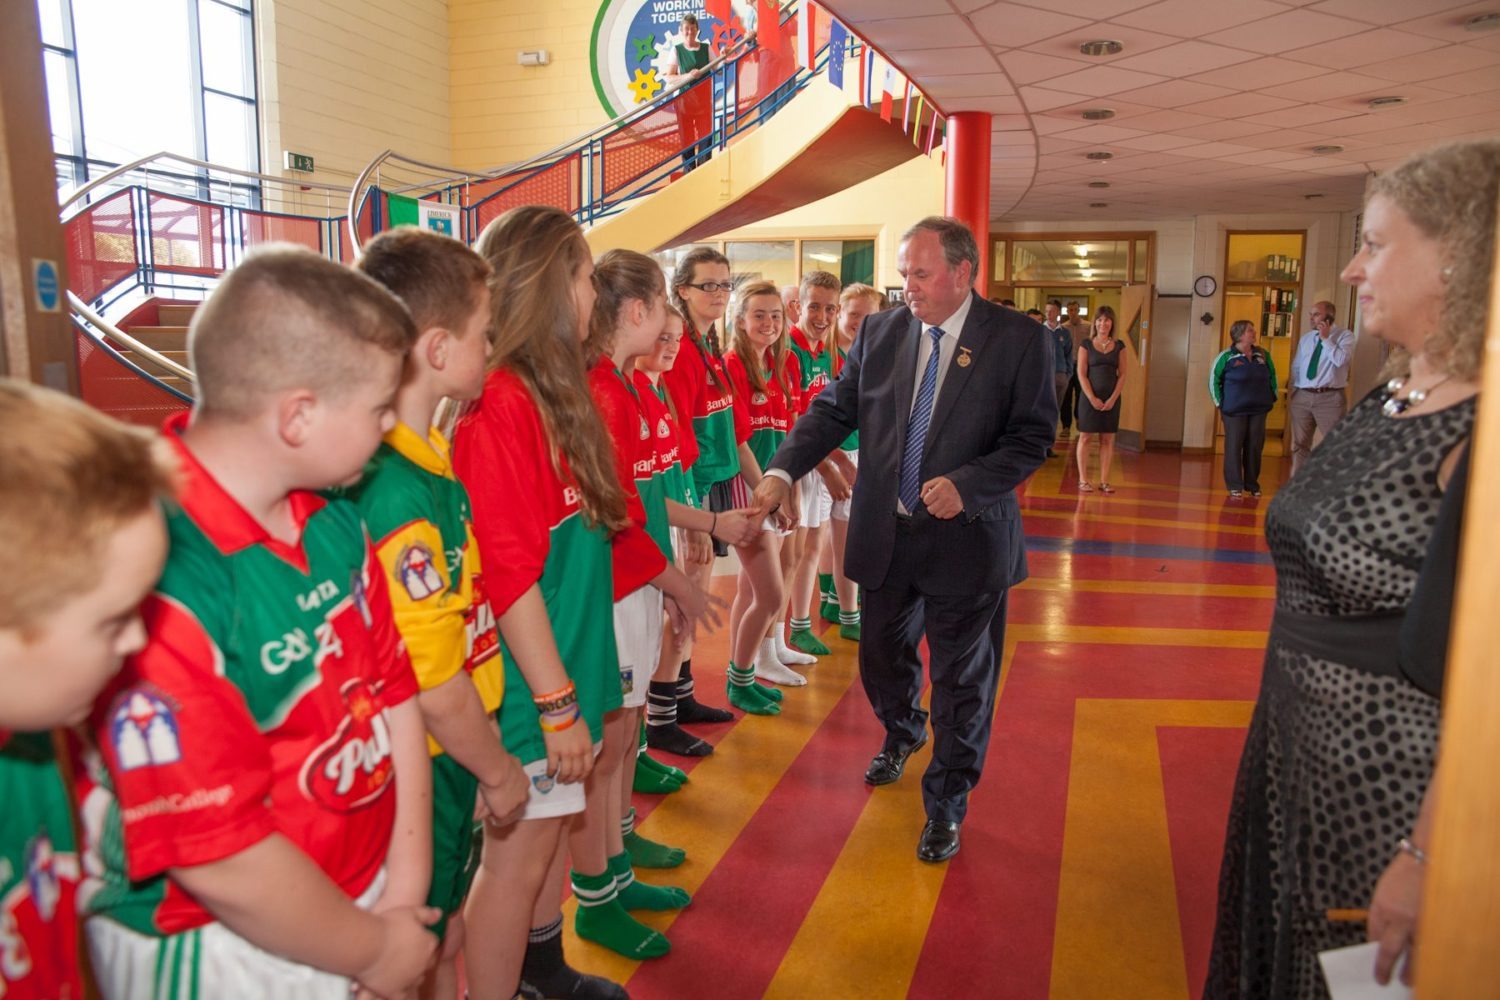 GAA President visit to Desmond College School